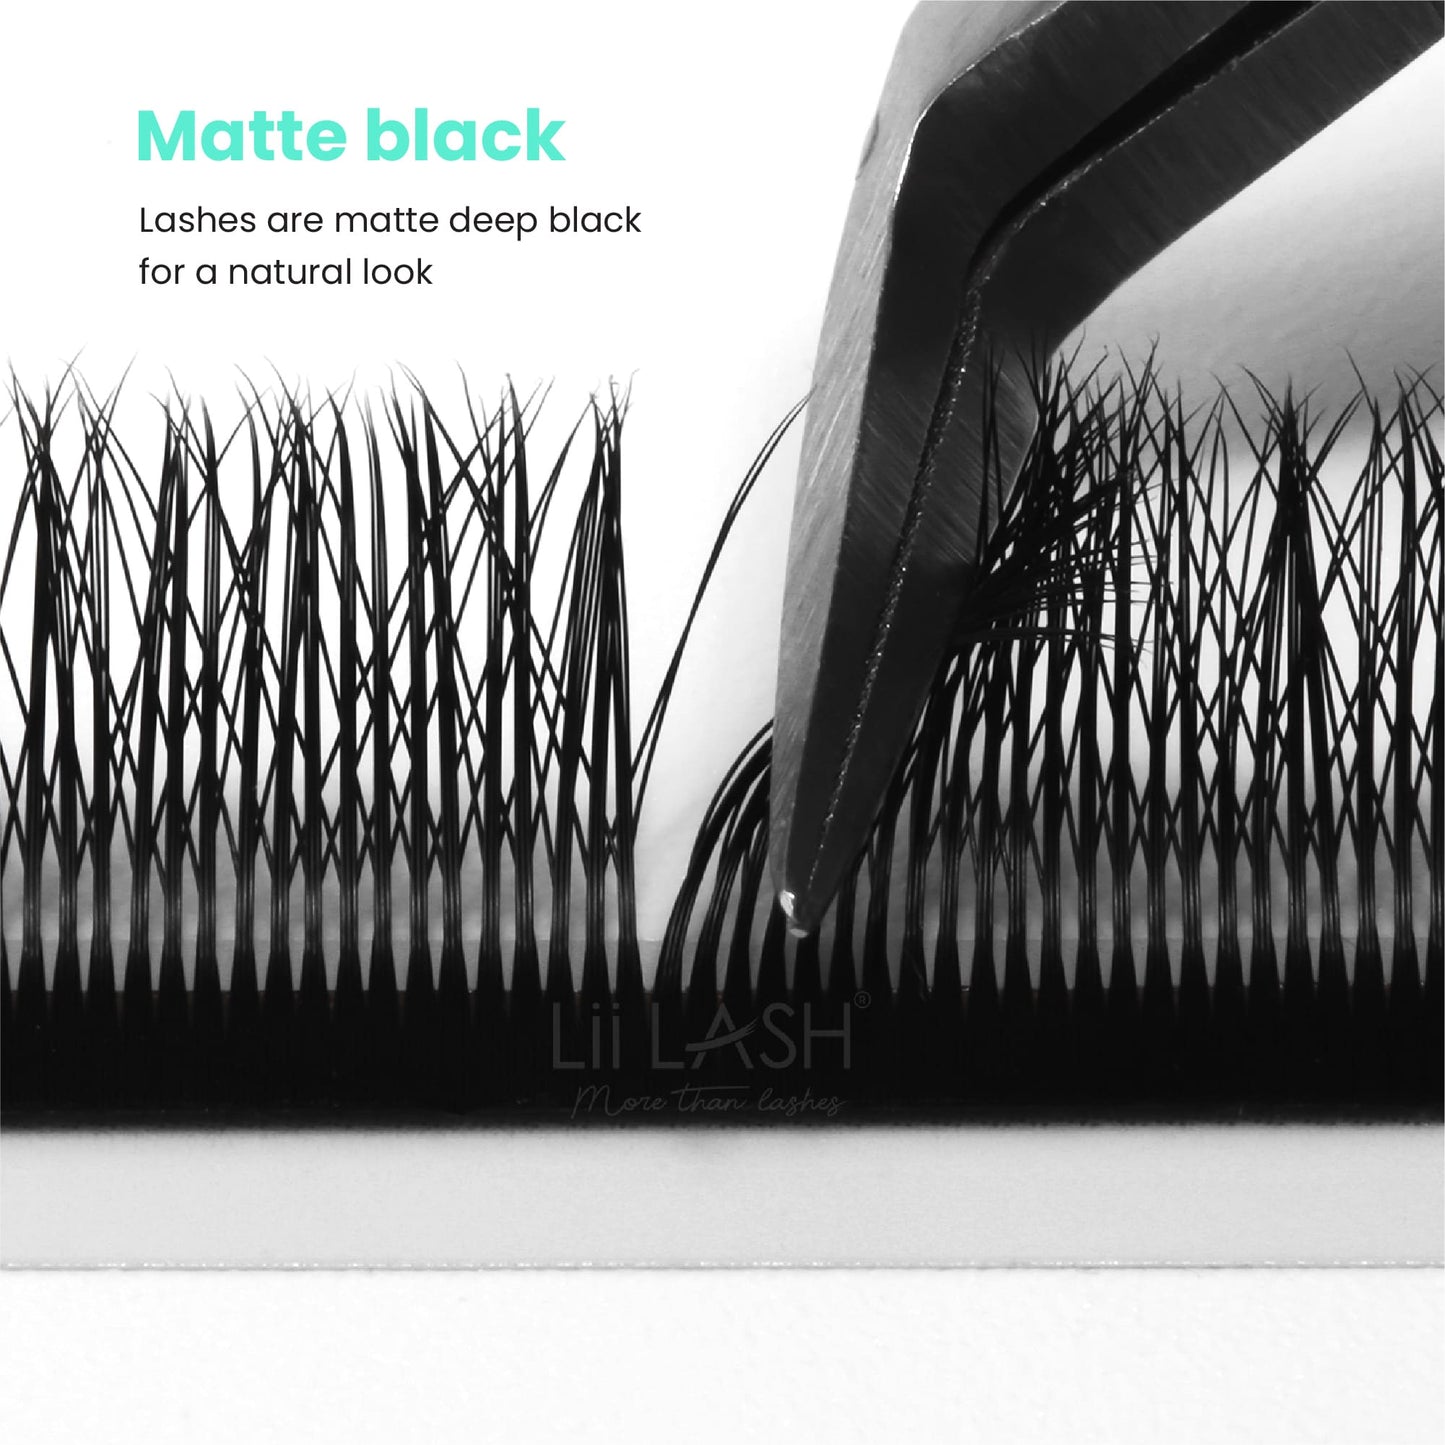 Matte-black-5D-Wispy-W-Lash